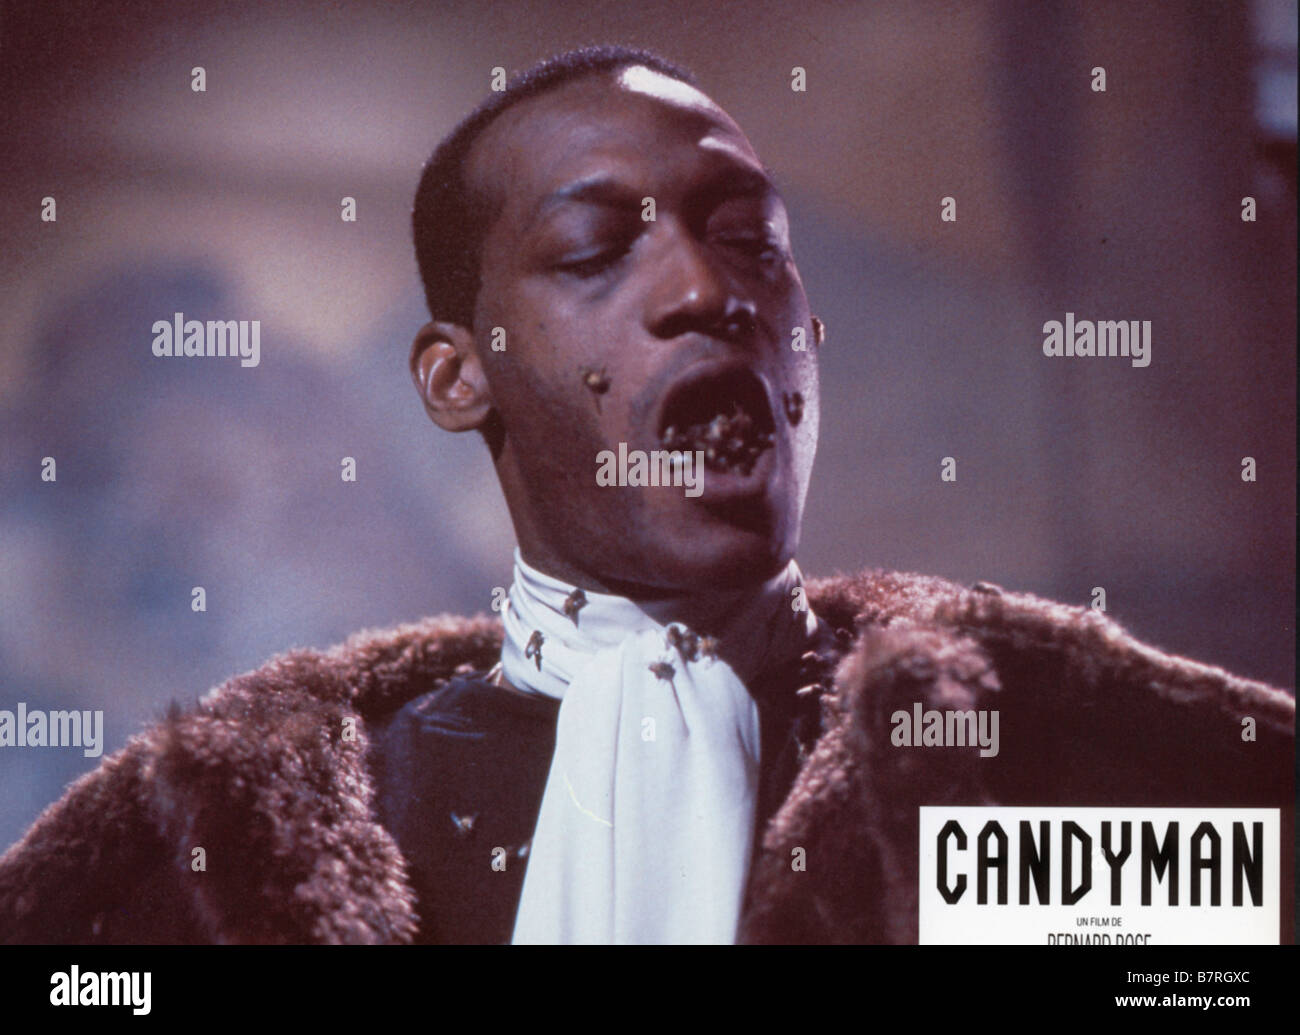 2011 Panini Americana #32 TONY TODD Actor 24, Candyman card in Toploader